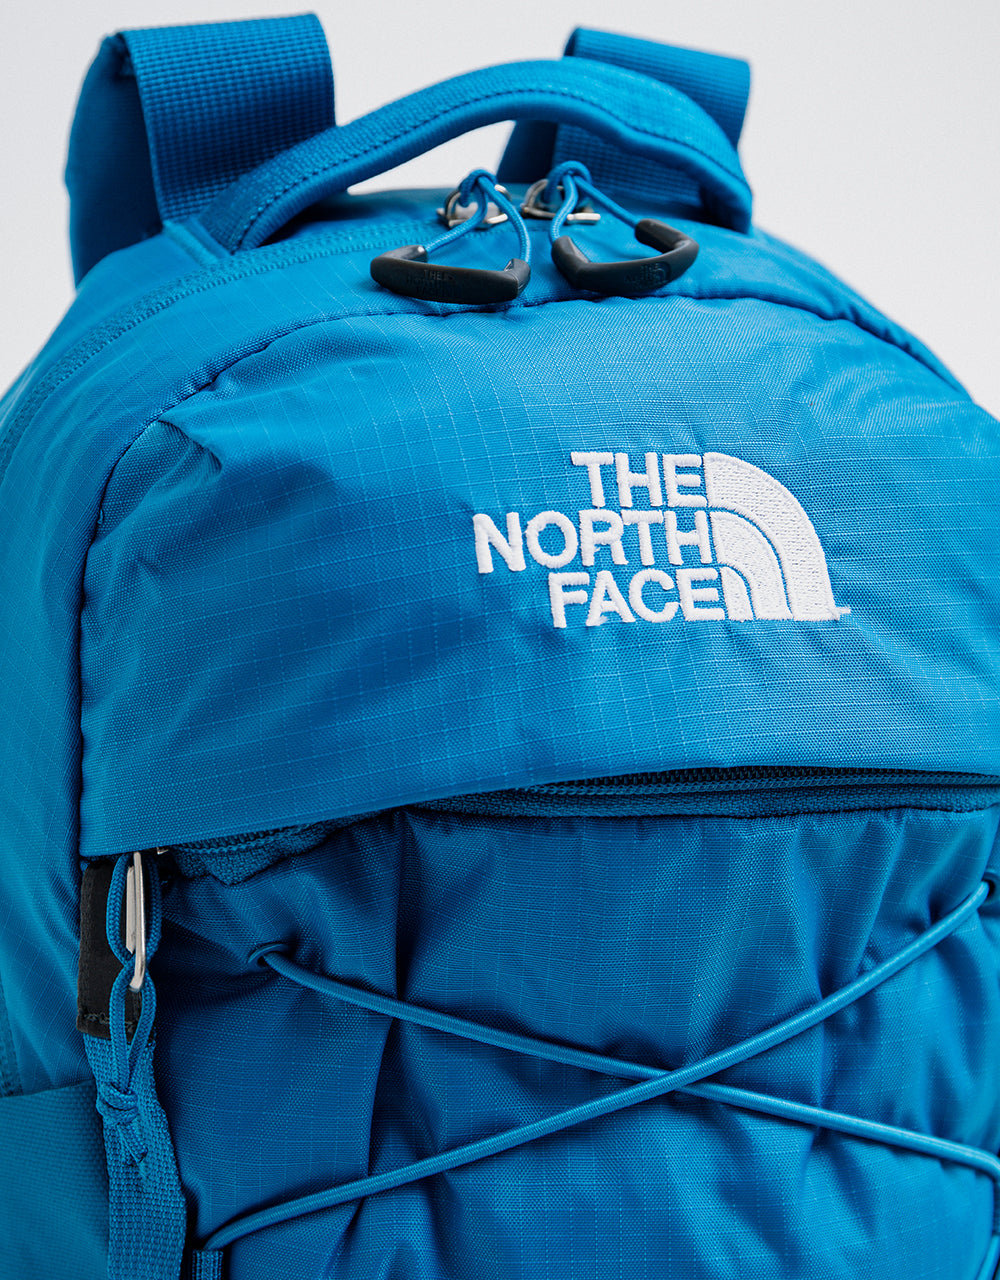 The North Face Borealis Mini Backpack - Banff Blue/TNF White